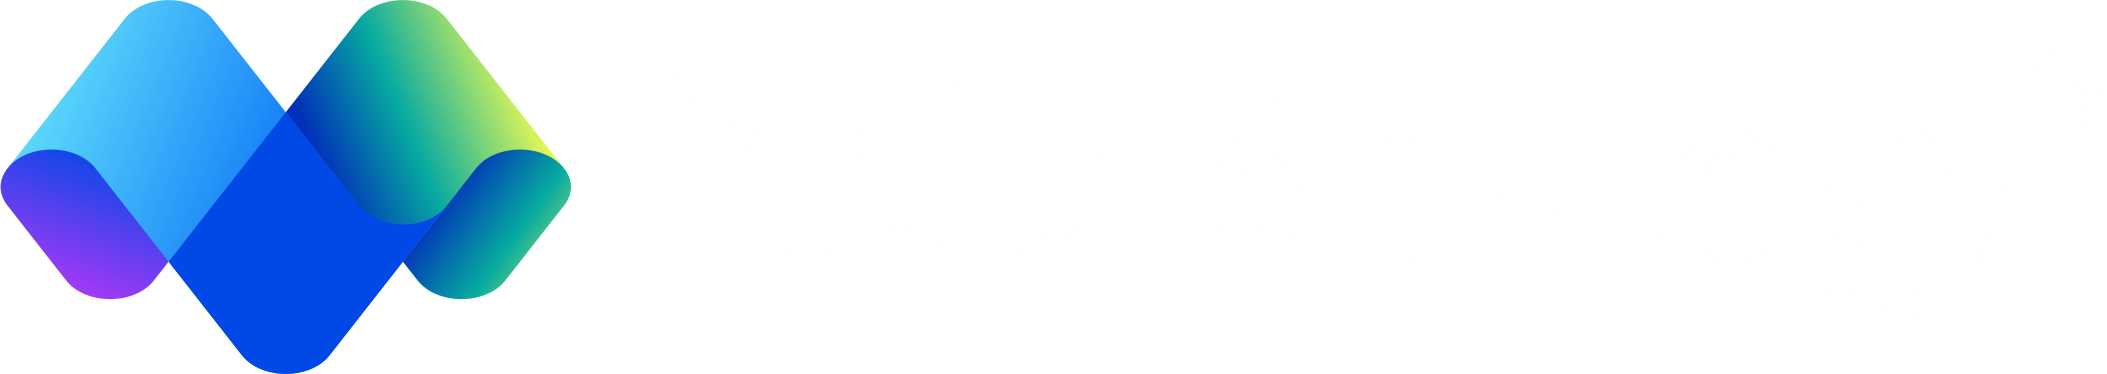 Meta Strategy - Your Future Evolution